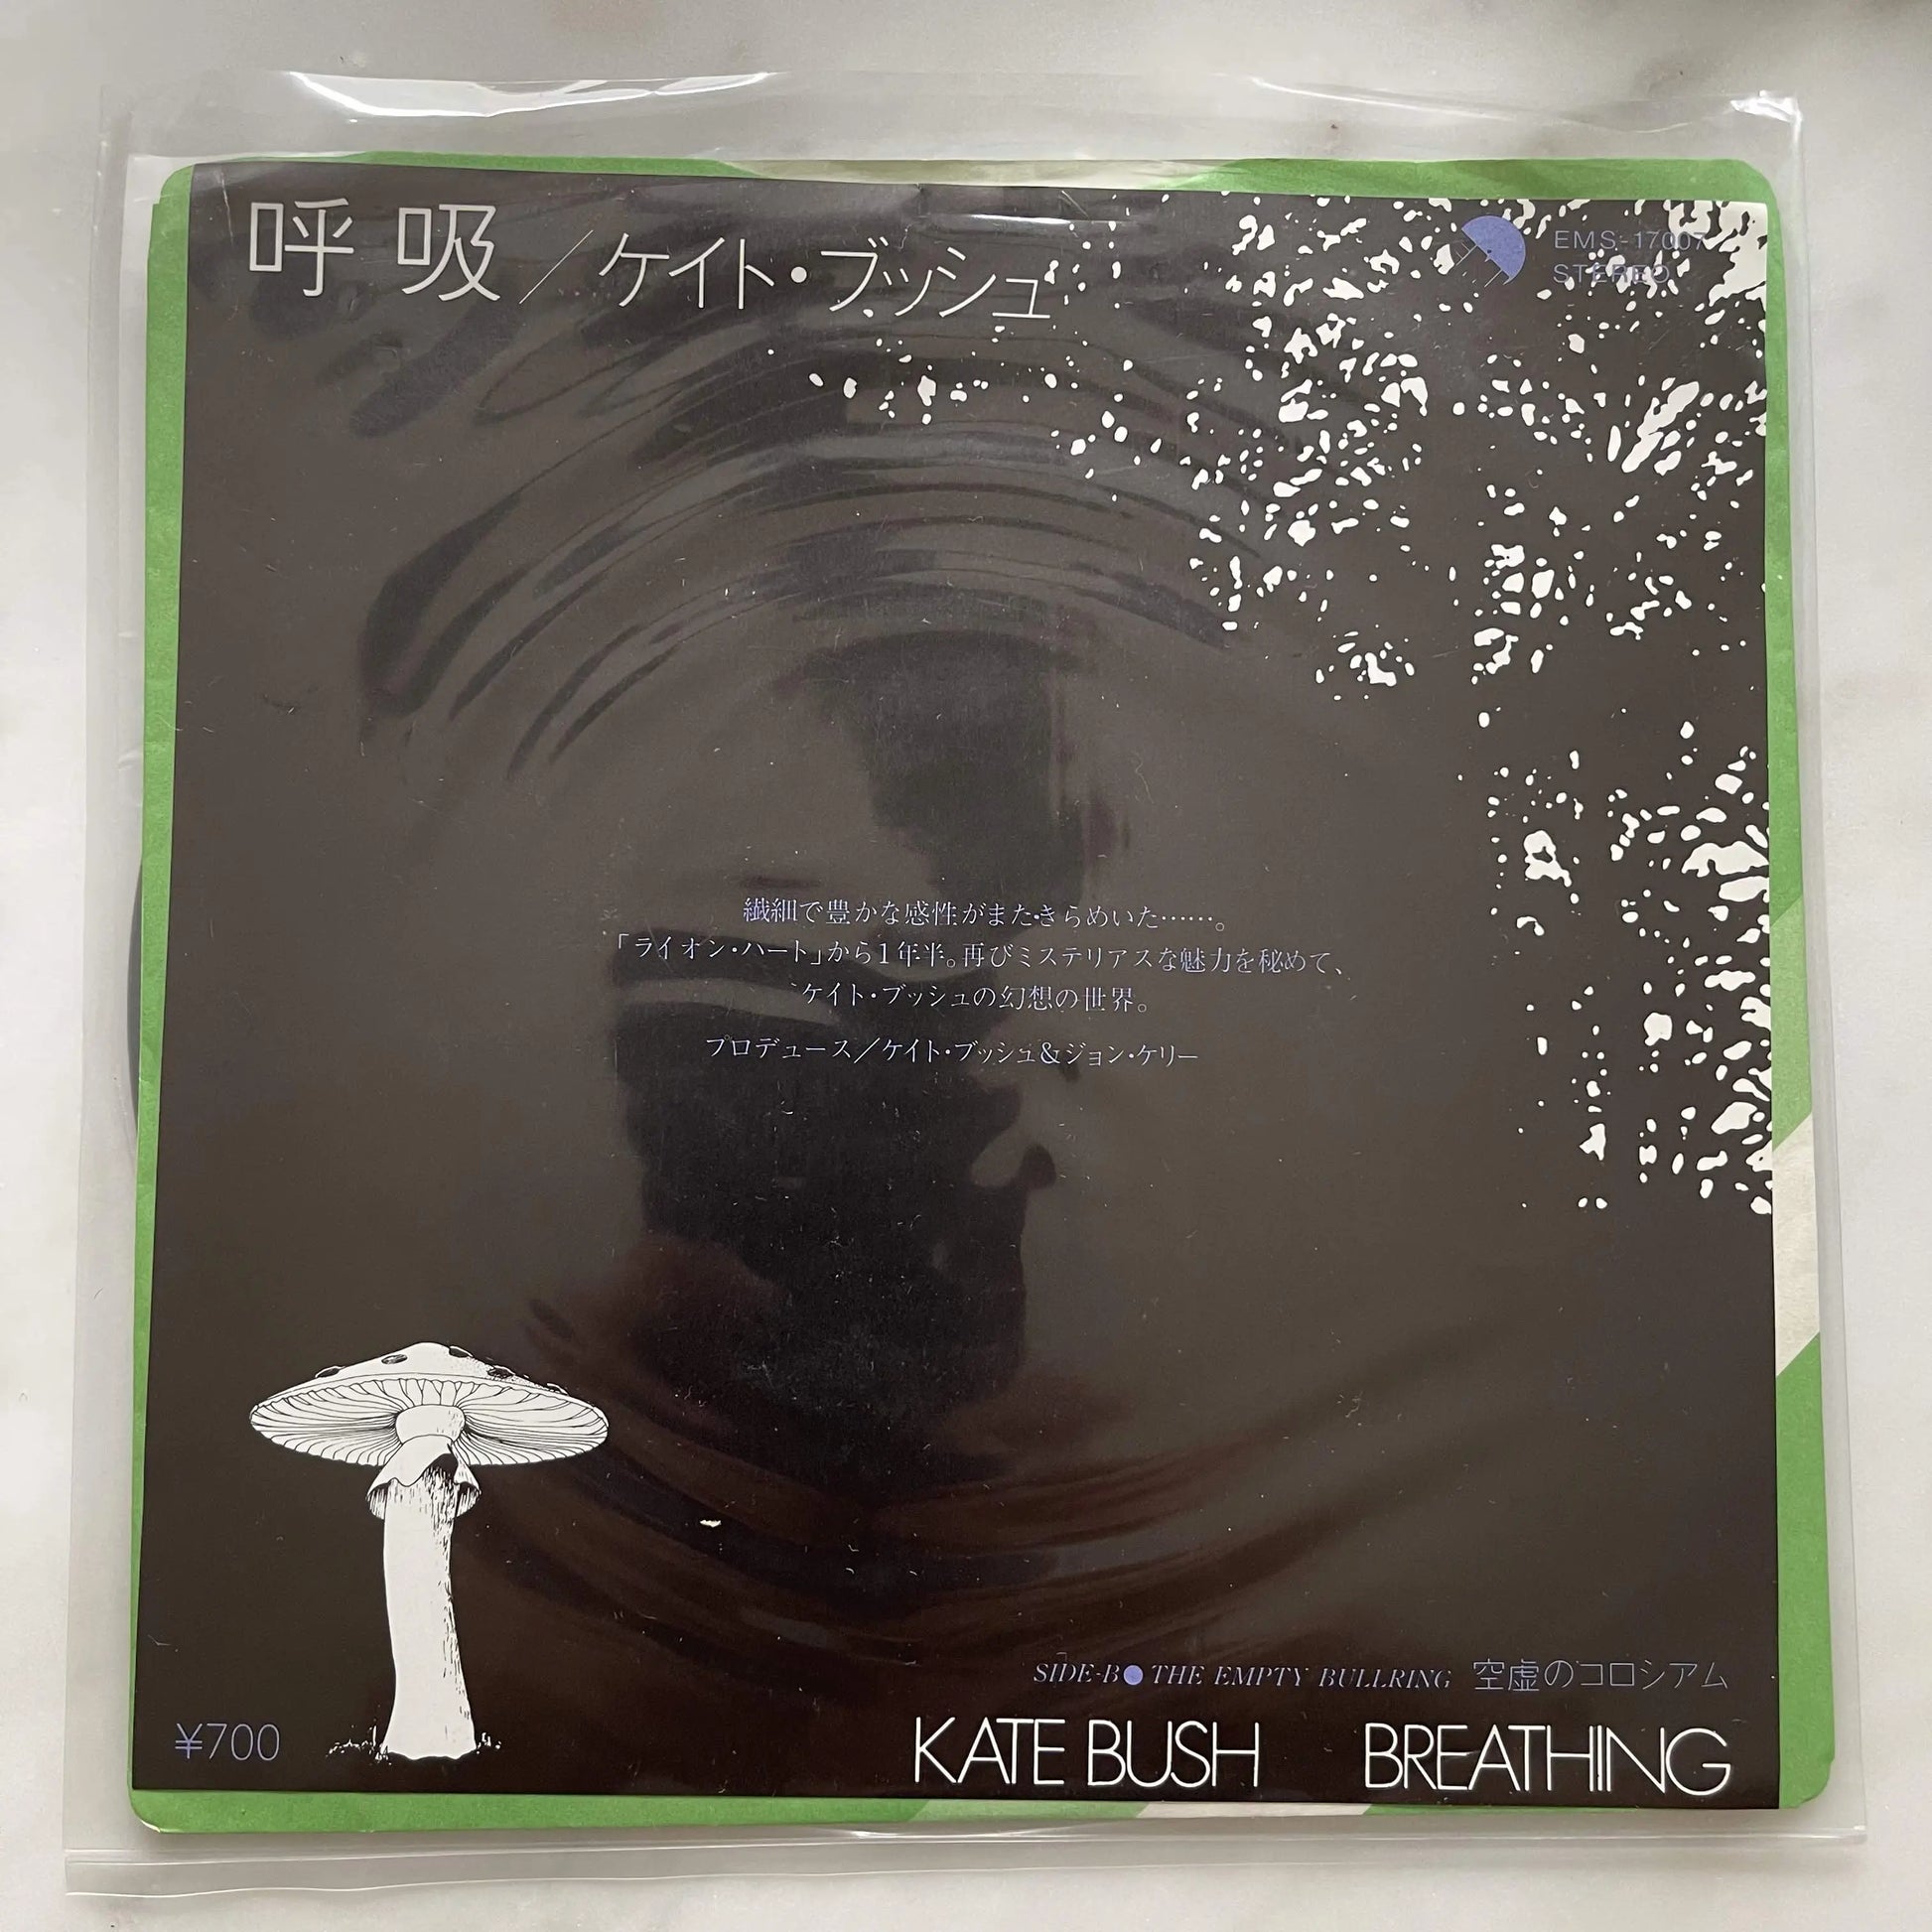 Kate Bush - Breathing [Japanese 45 rpm 7" Single LP]